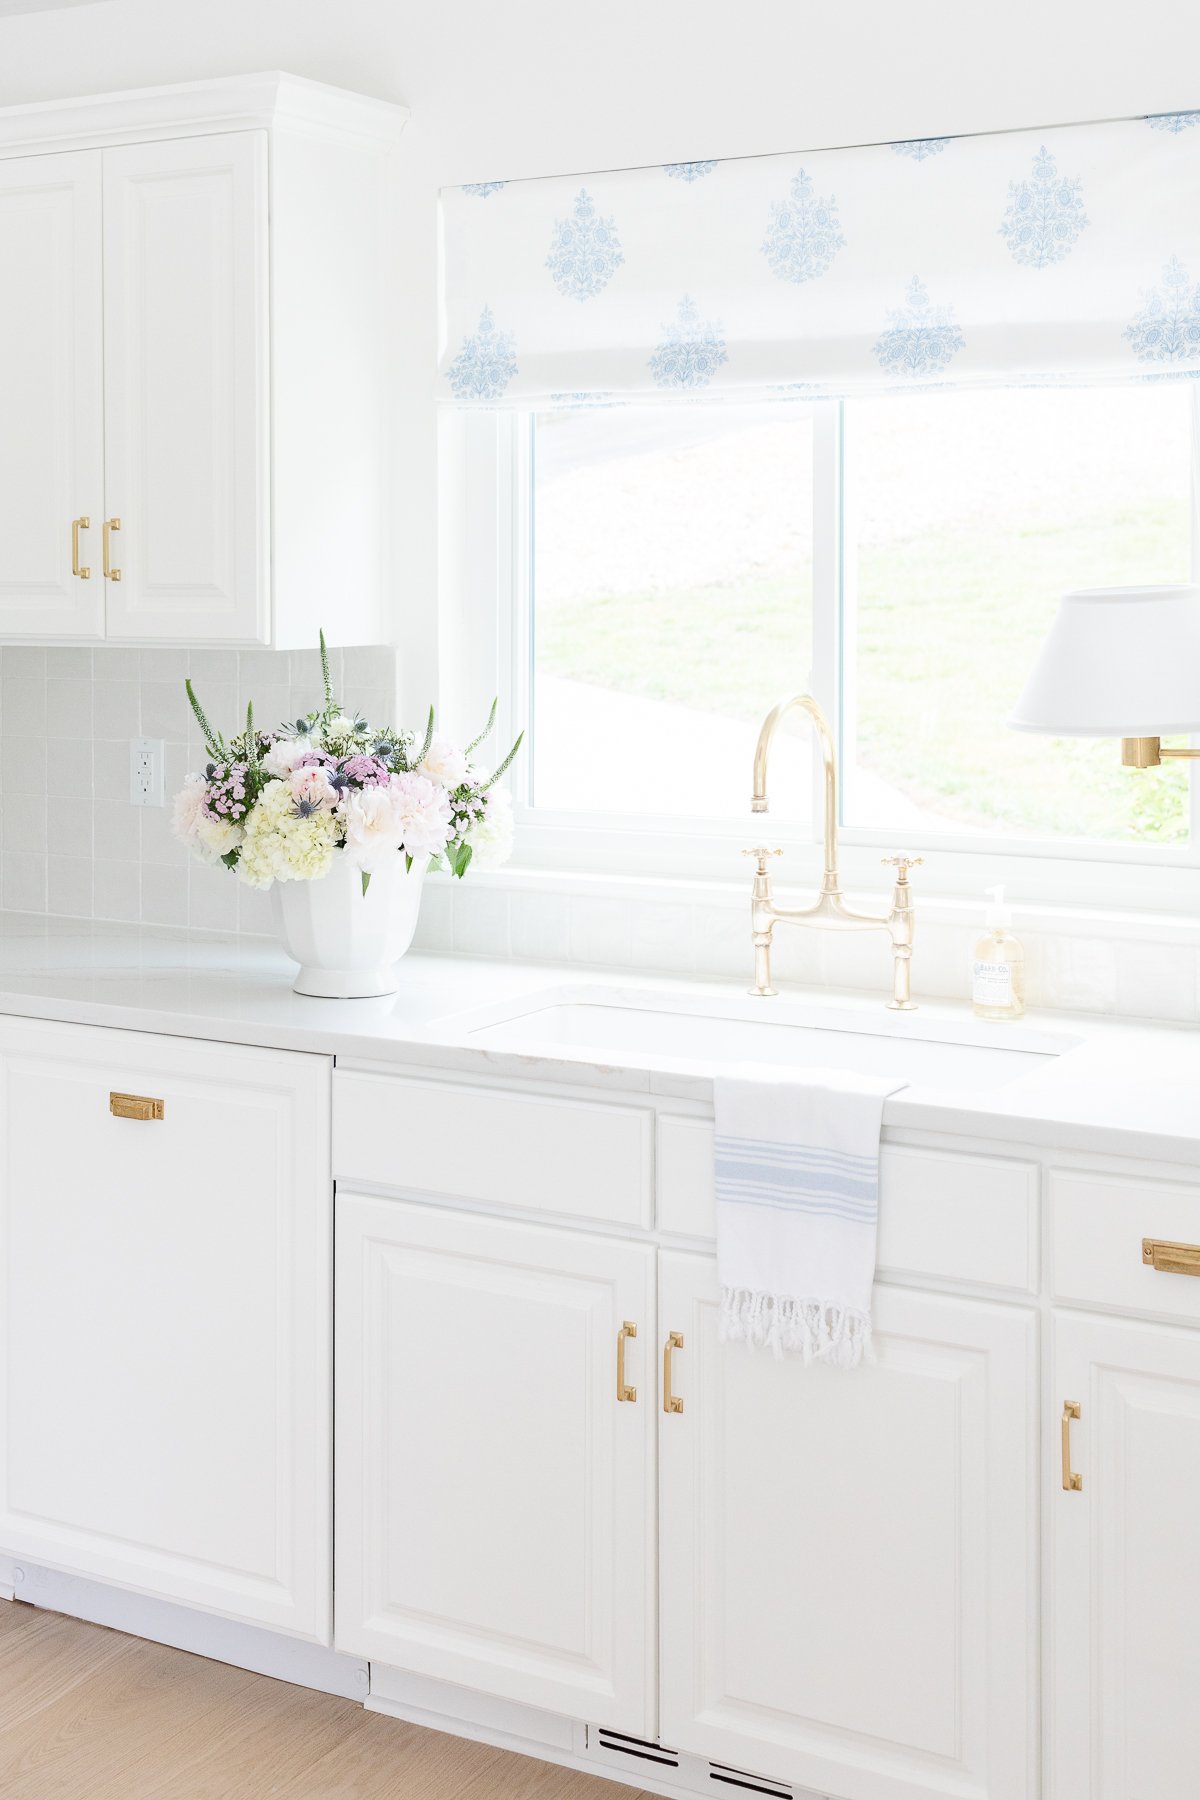 A white kitchen featuring white quartz countertops.